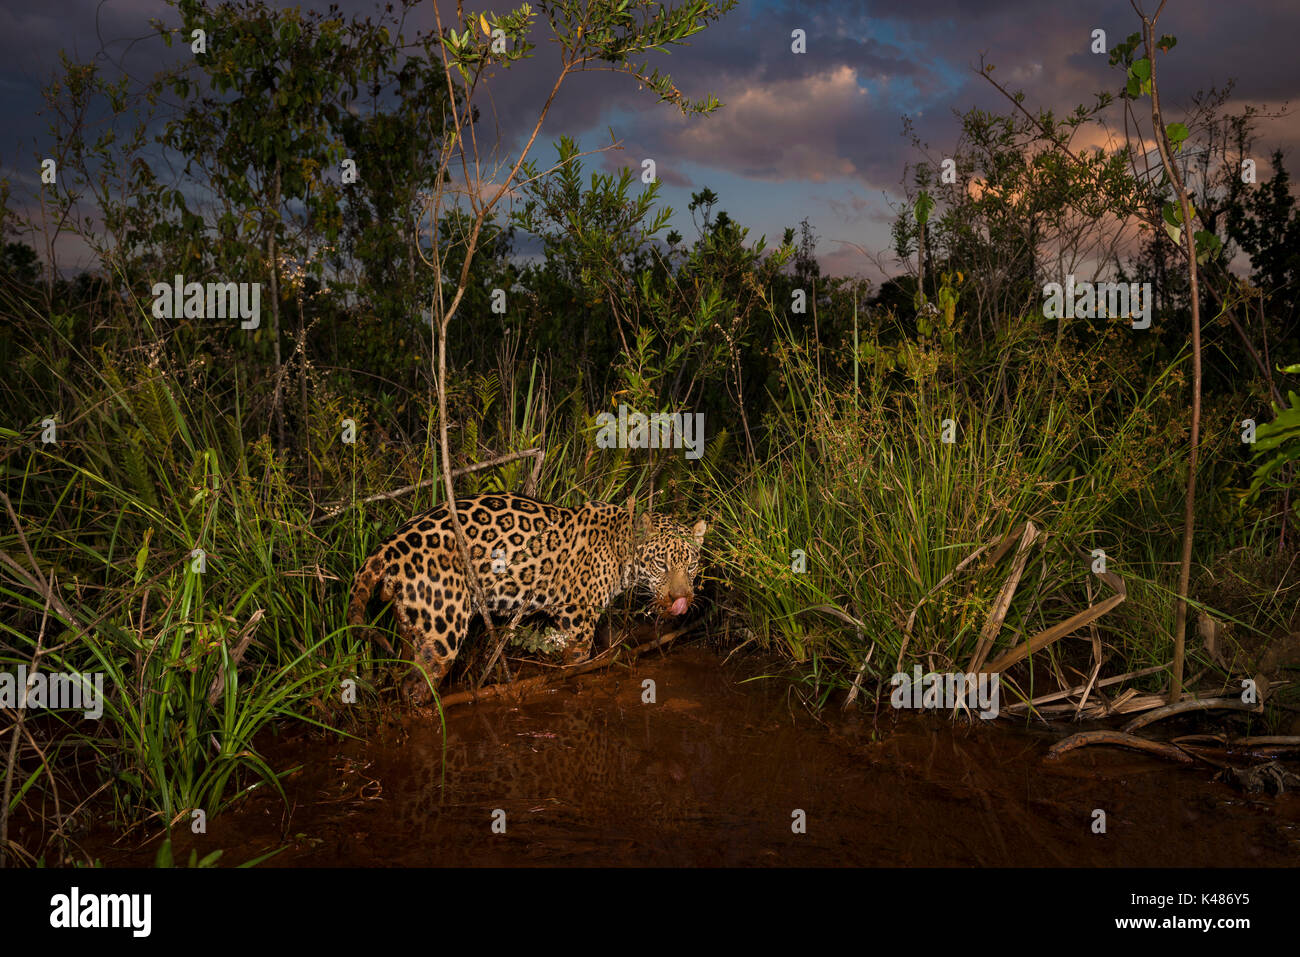 A Jaguar explores a wetland in Central Brazil Stock Photo